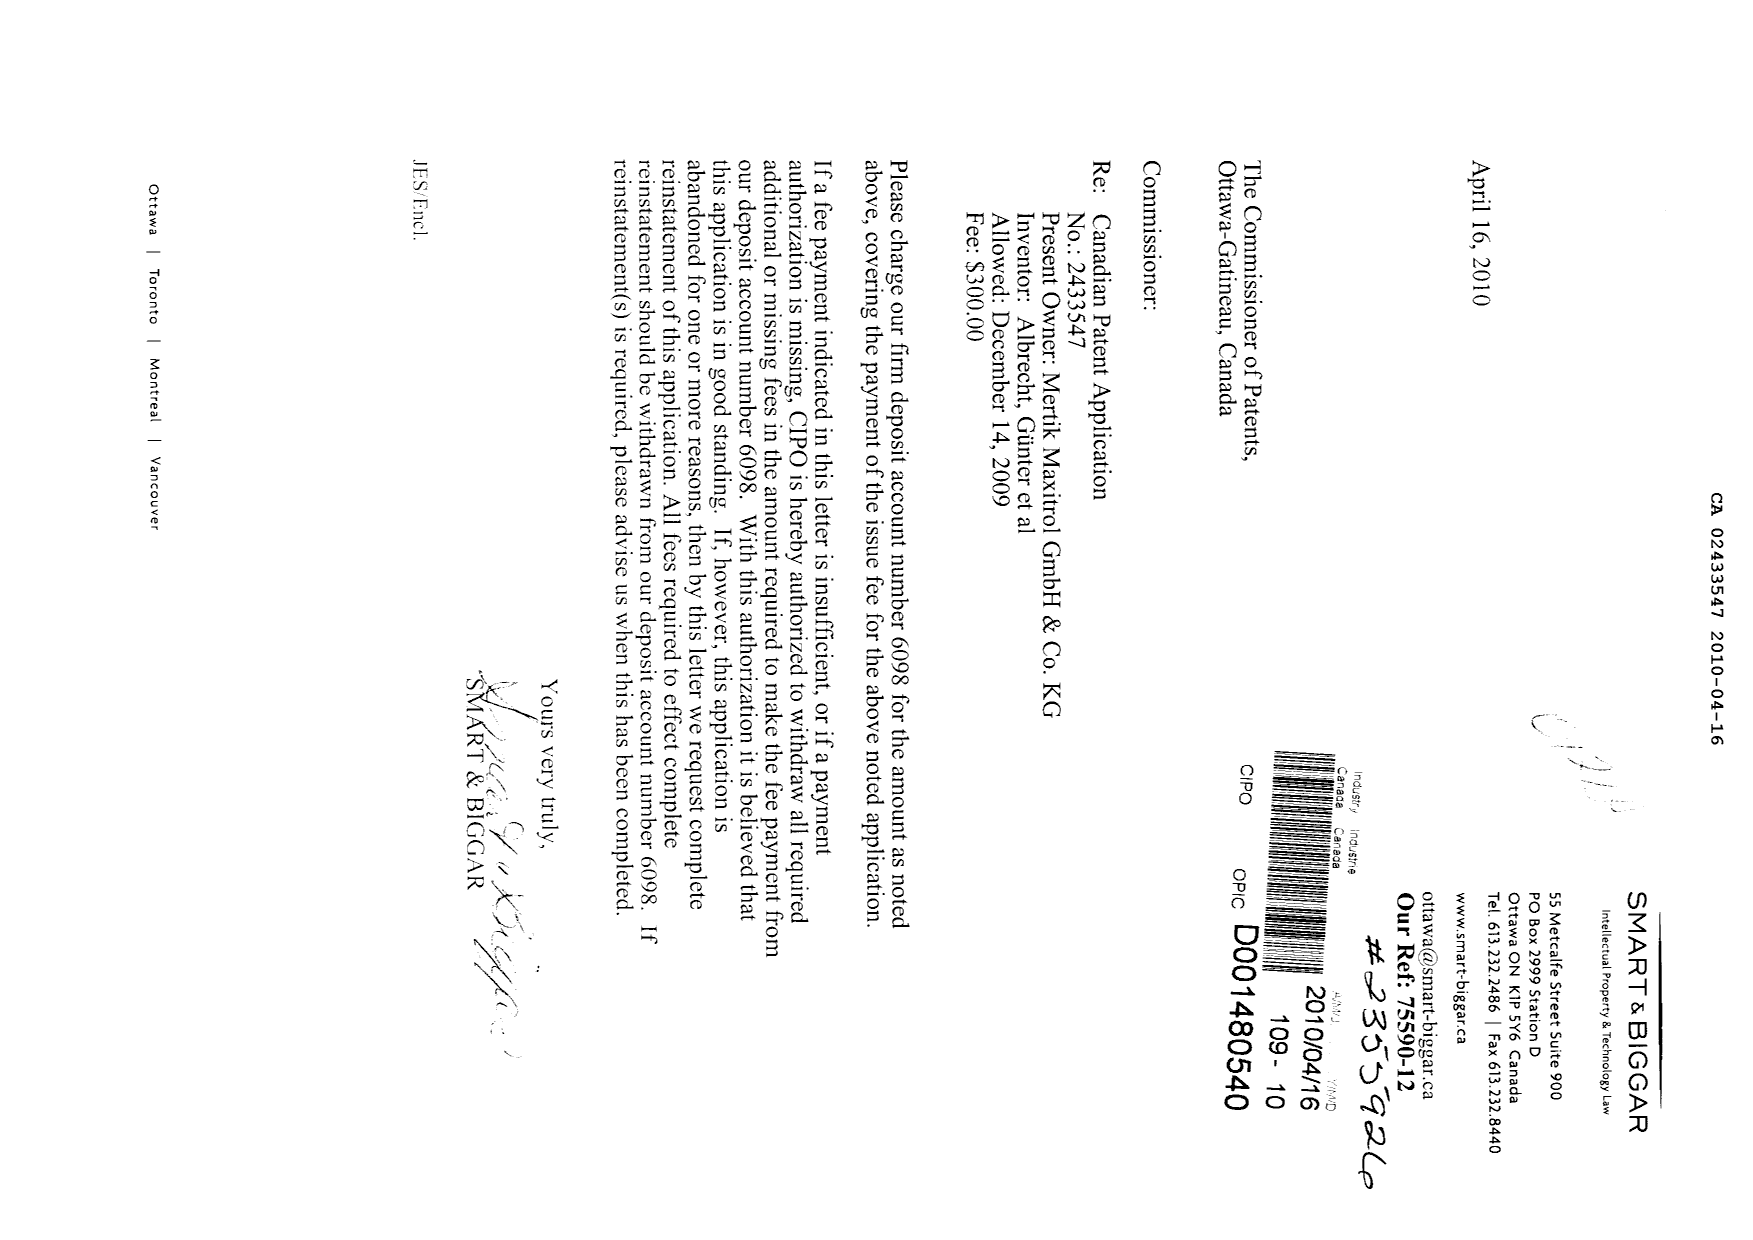 Canadian Patent Document 2433547. Correspondence 20100416. Image 1 of 1